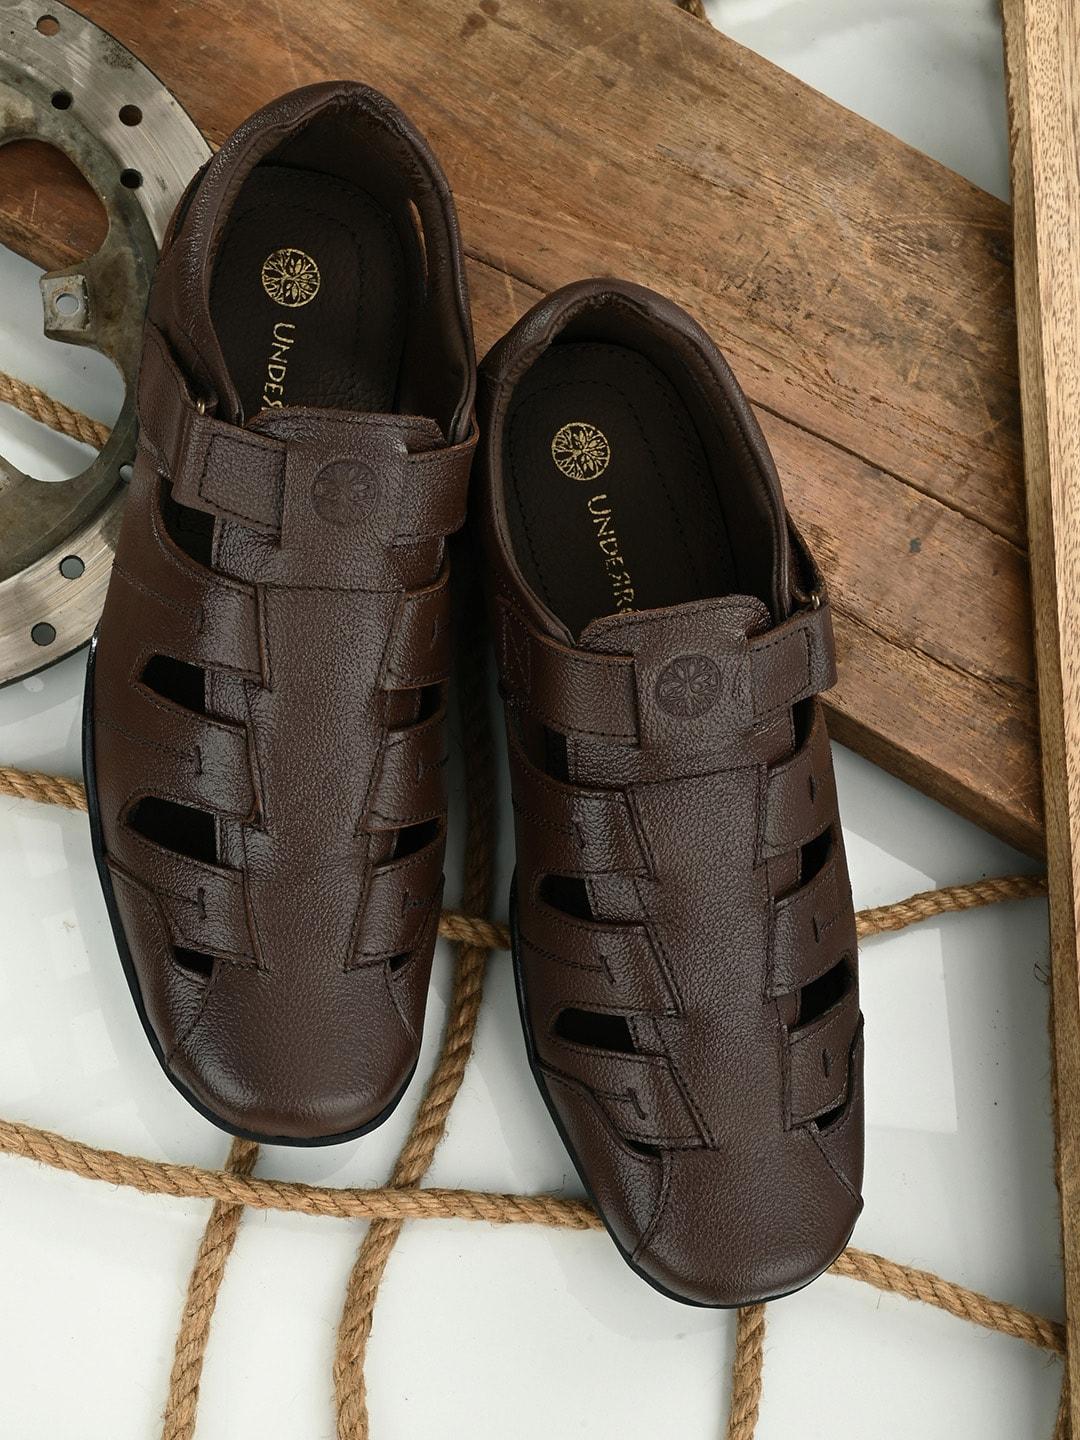 underroute-men-brown-leather-shoe-style-sandals